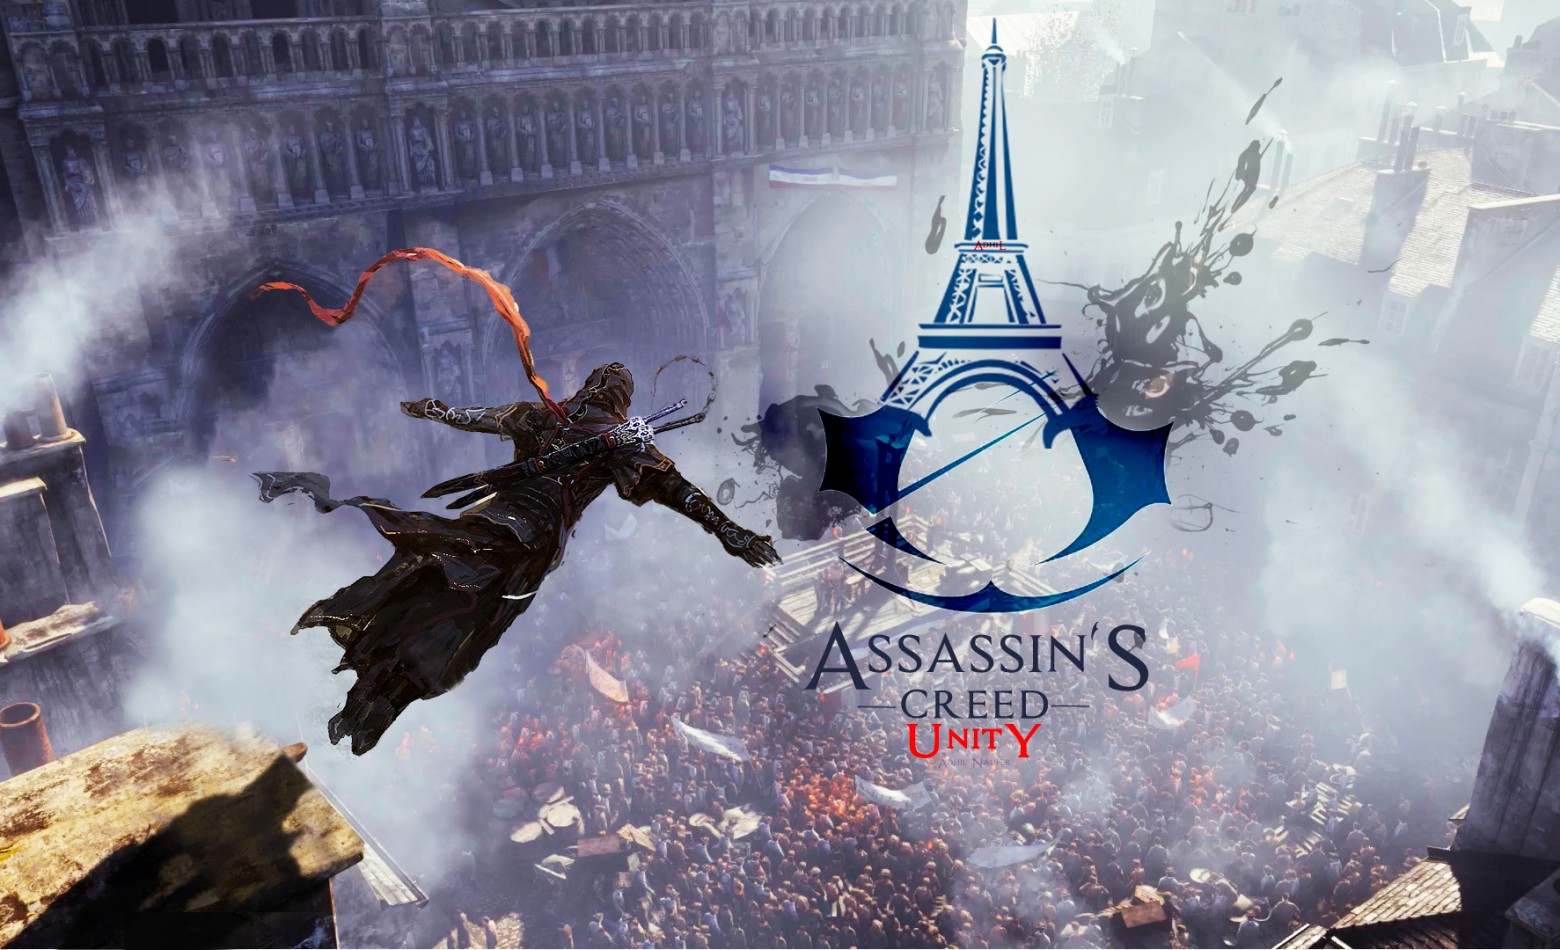 Assassin’s Creed Unity quer ter parkour mais realista